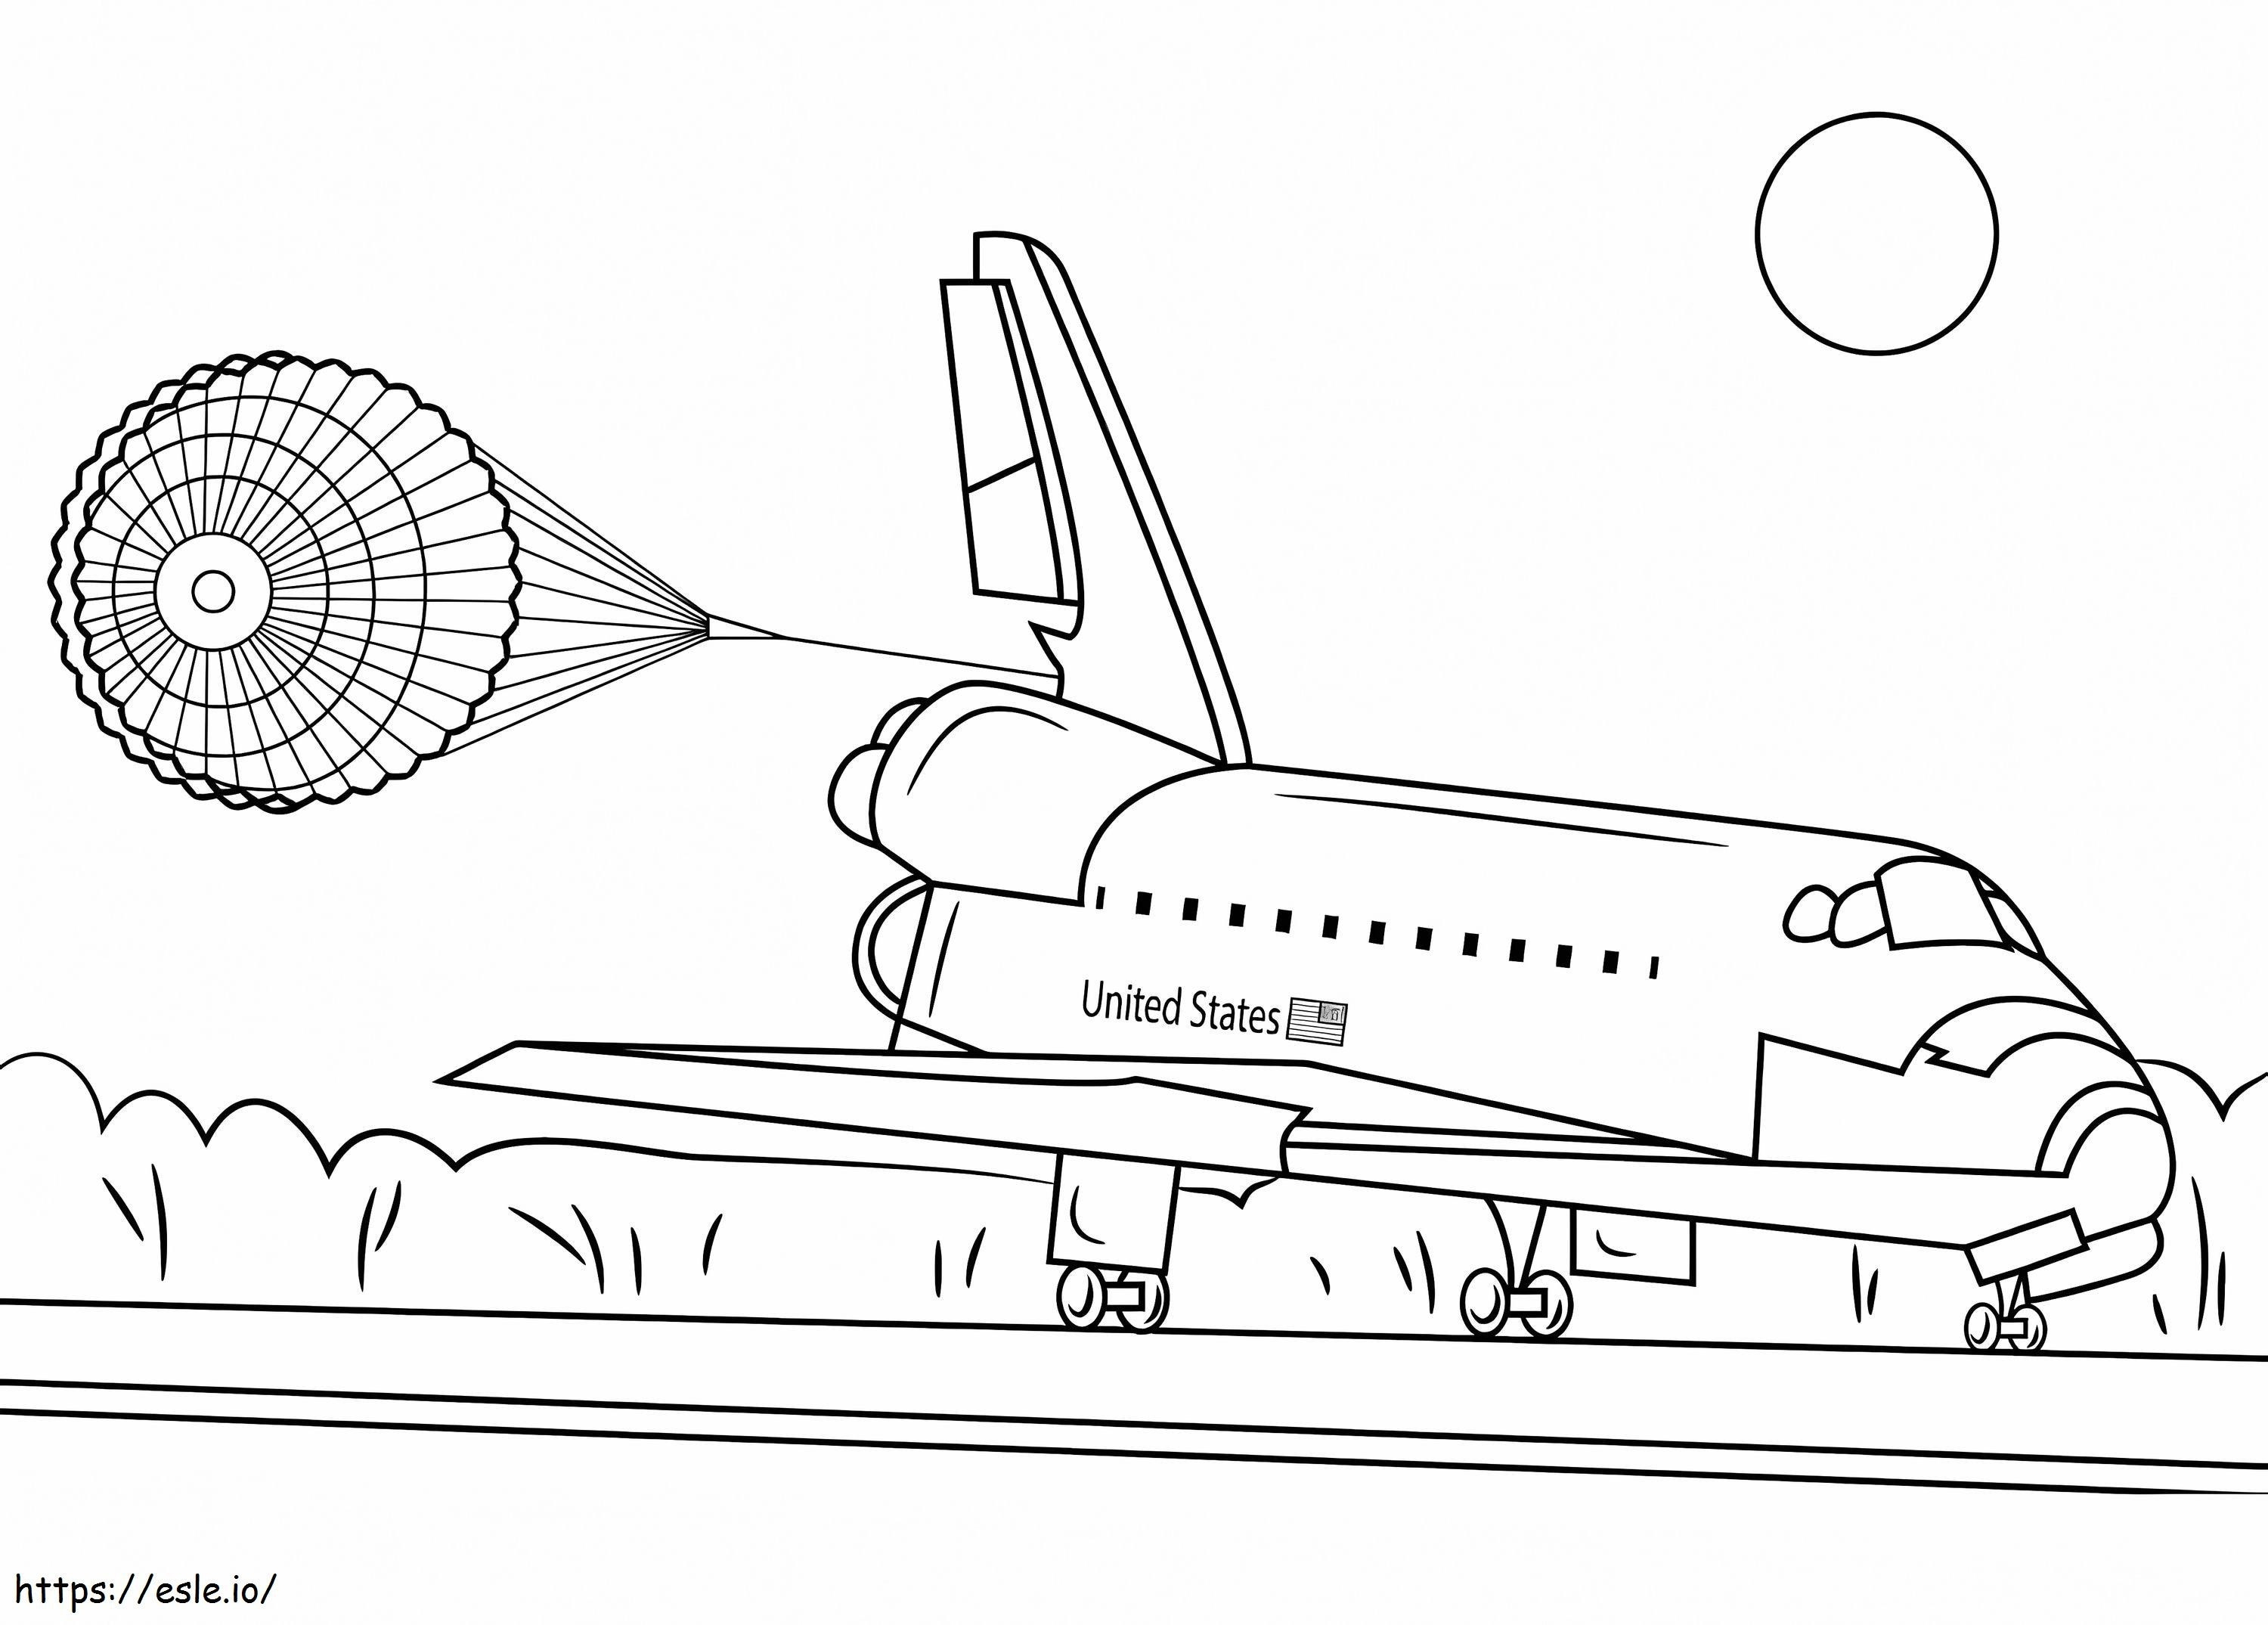 Space Shuttle Endeavour Landing coloring page